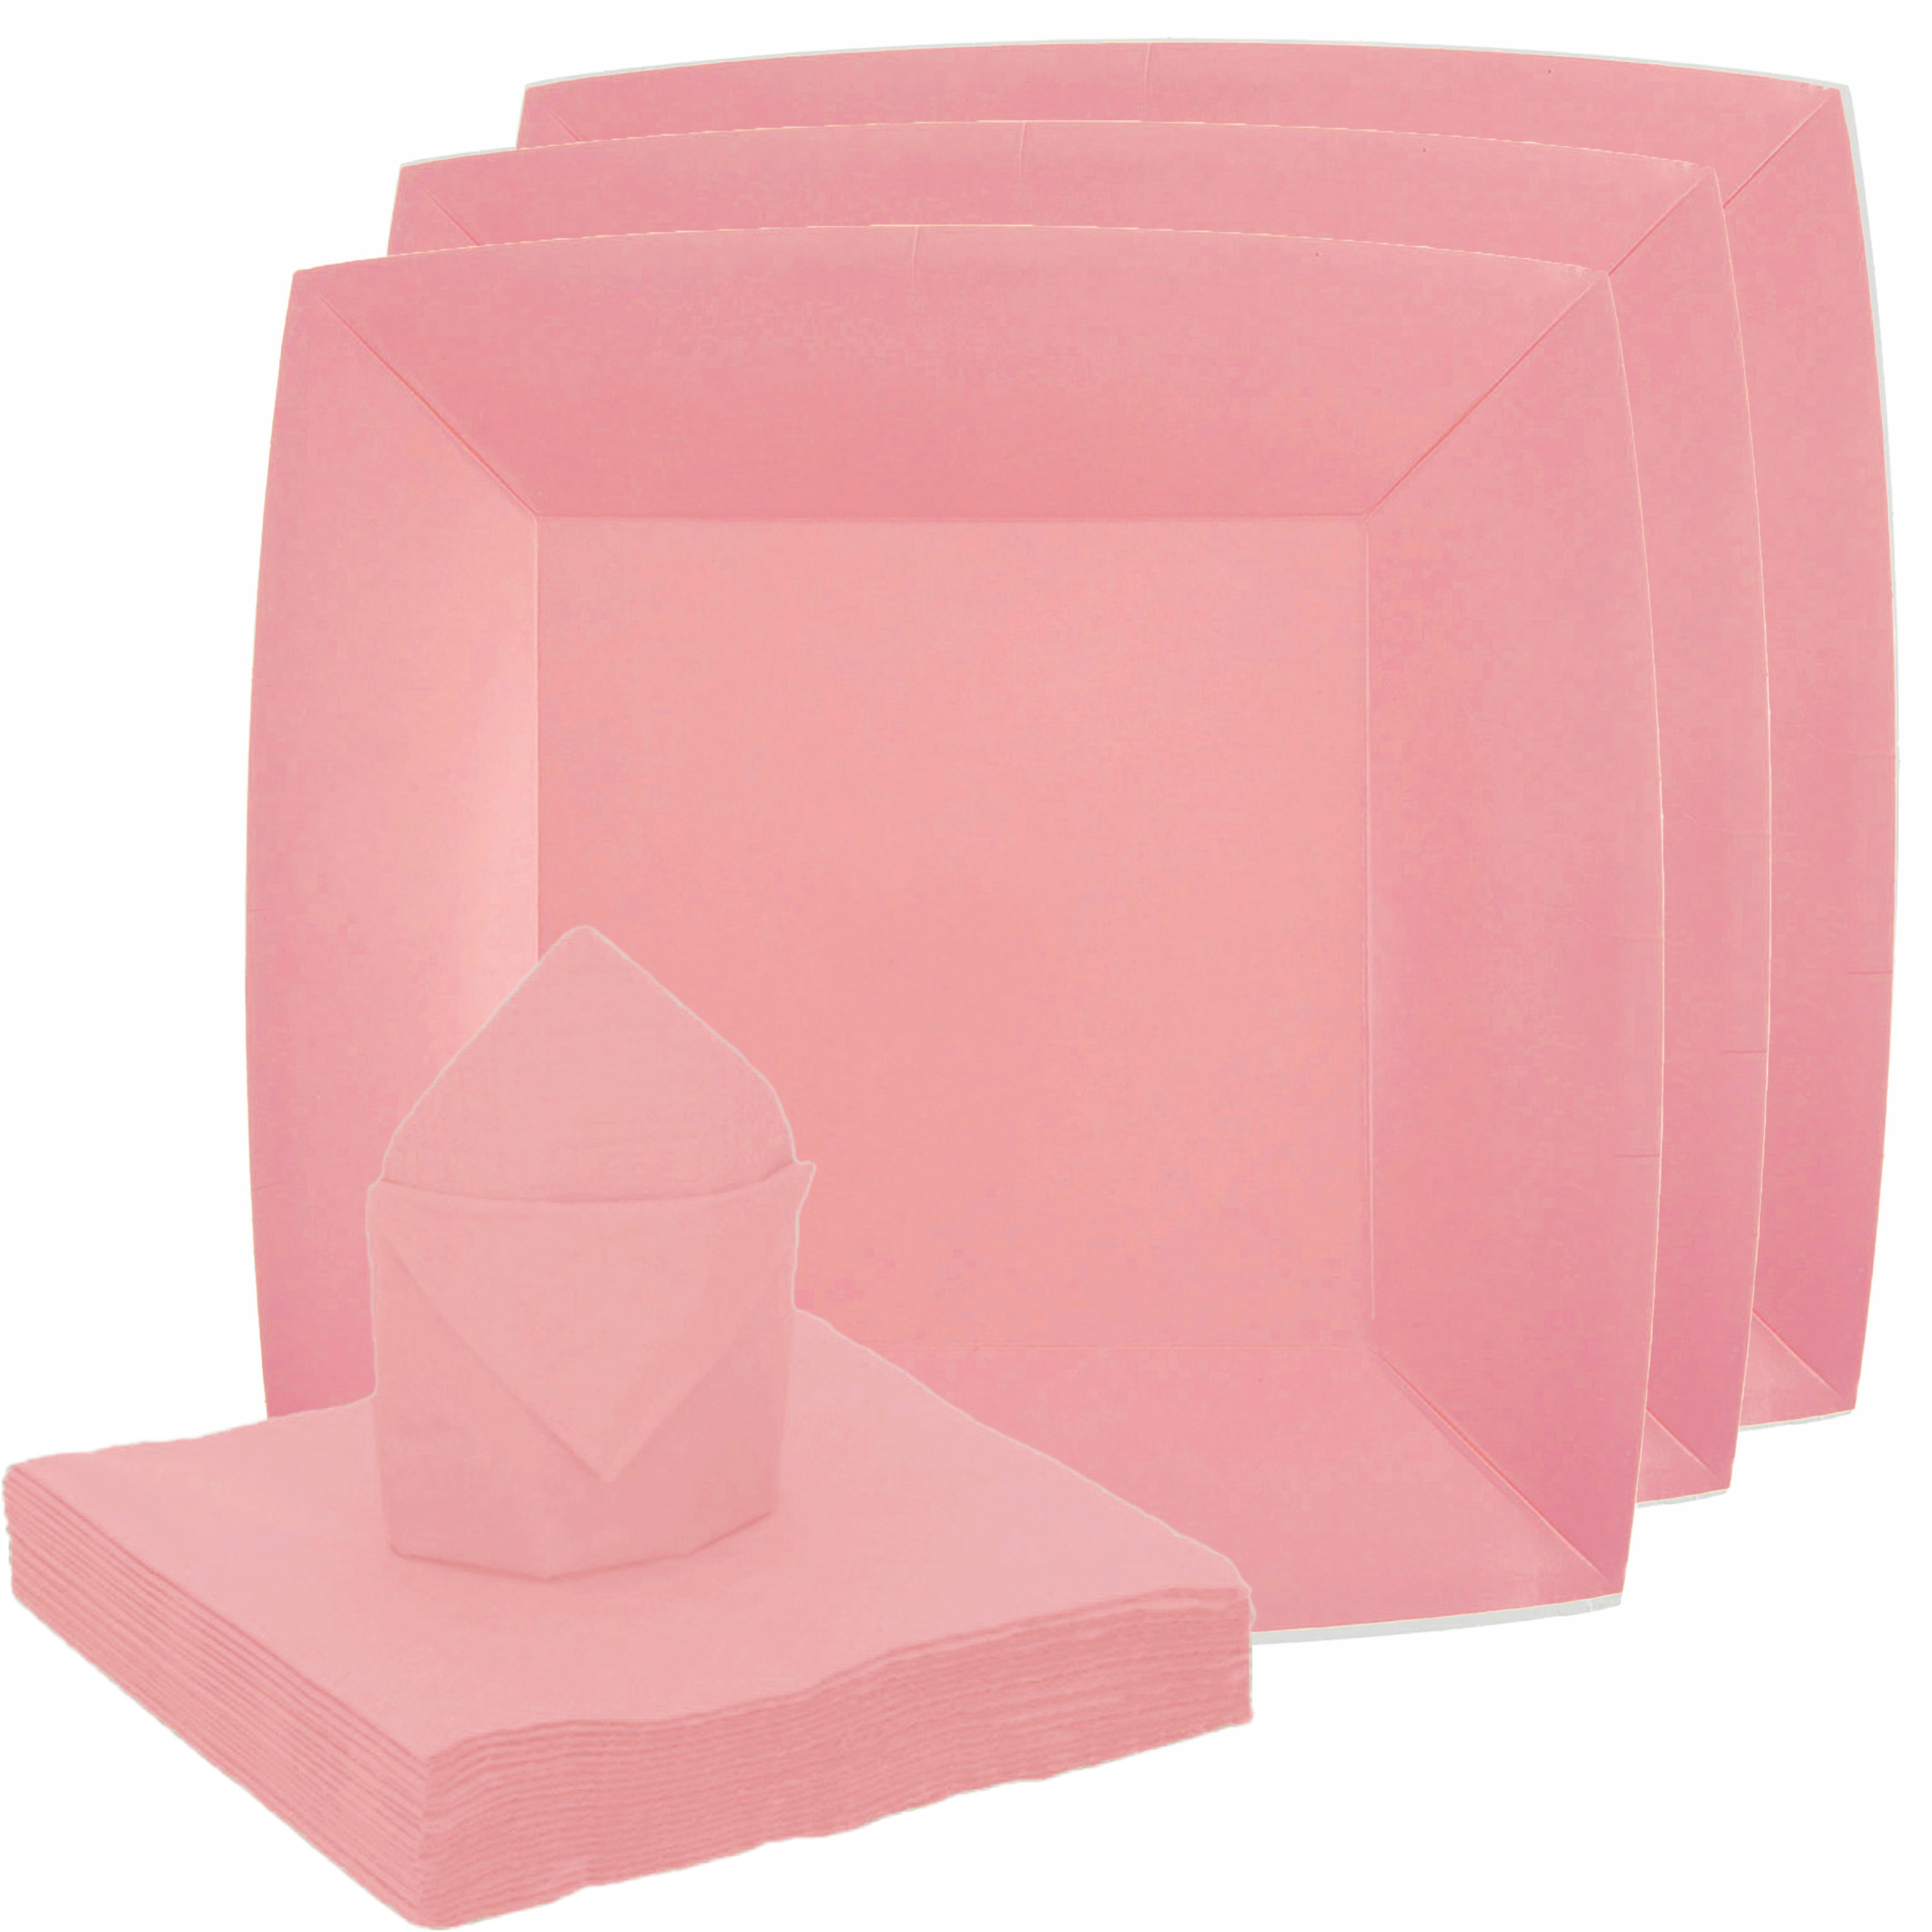 Feest-verjaardag servies set 20x bordjes-25x servetten roze karton